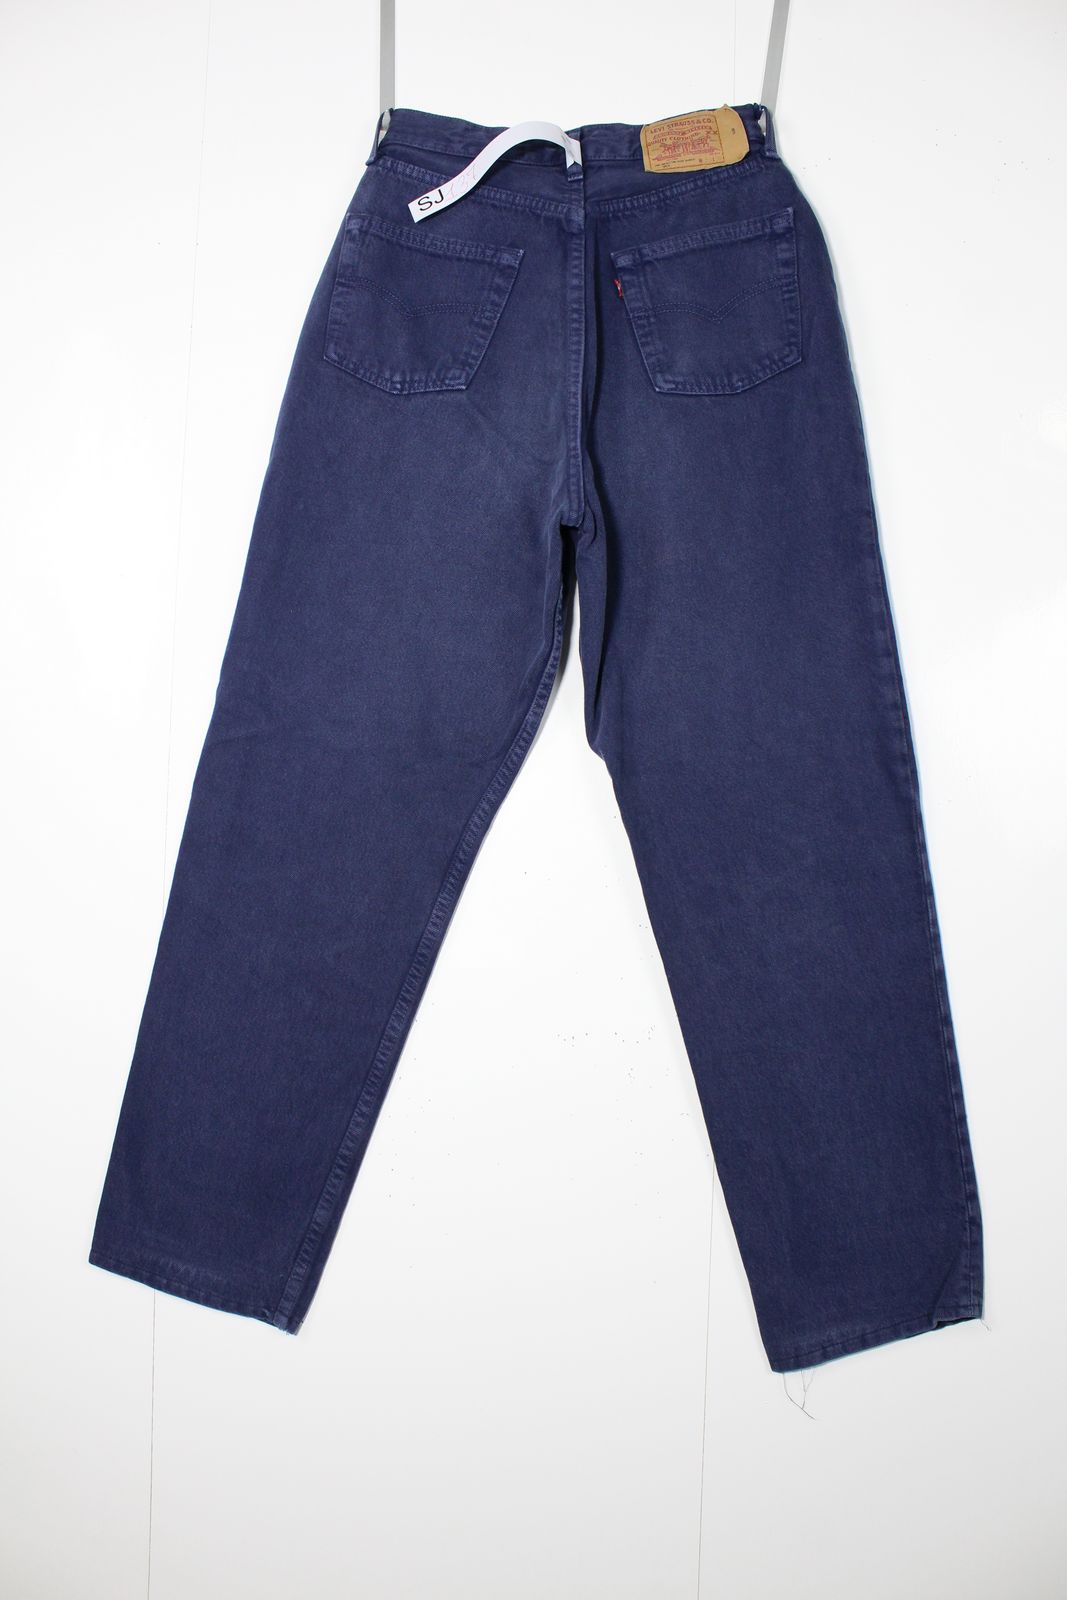 Levi's 901 W33 L32 Blu Navy Denim Made In USA Jeans Vintage